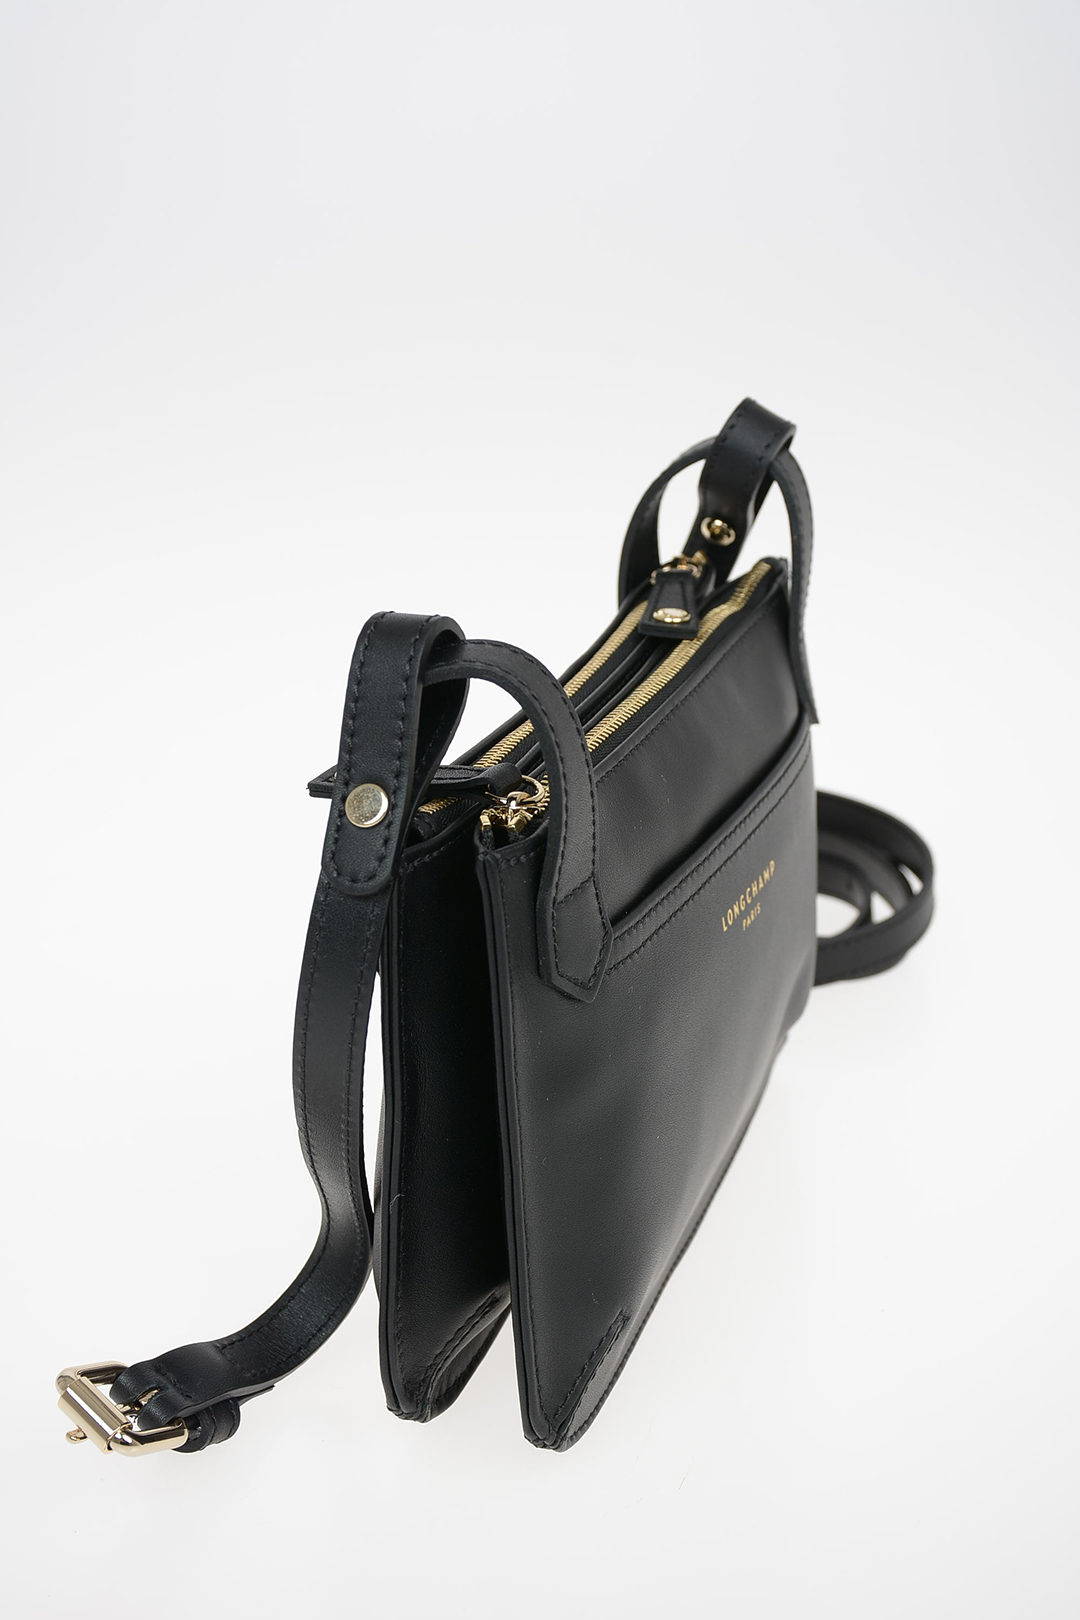 HAVREDELUXE Extended Chain For Longchamp Hobo Armpit Bag Shoulder Strap  Transformation Messenger Bag Strap - AliExpress